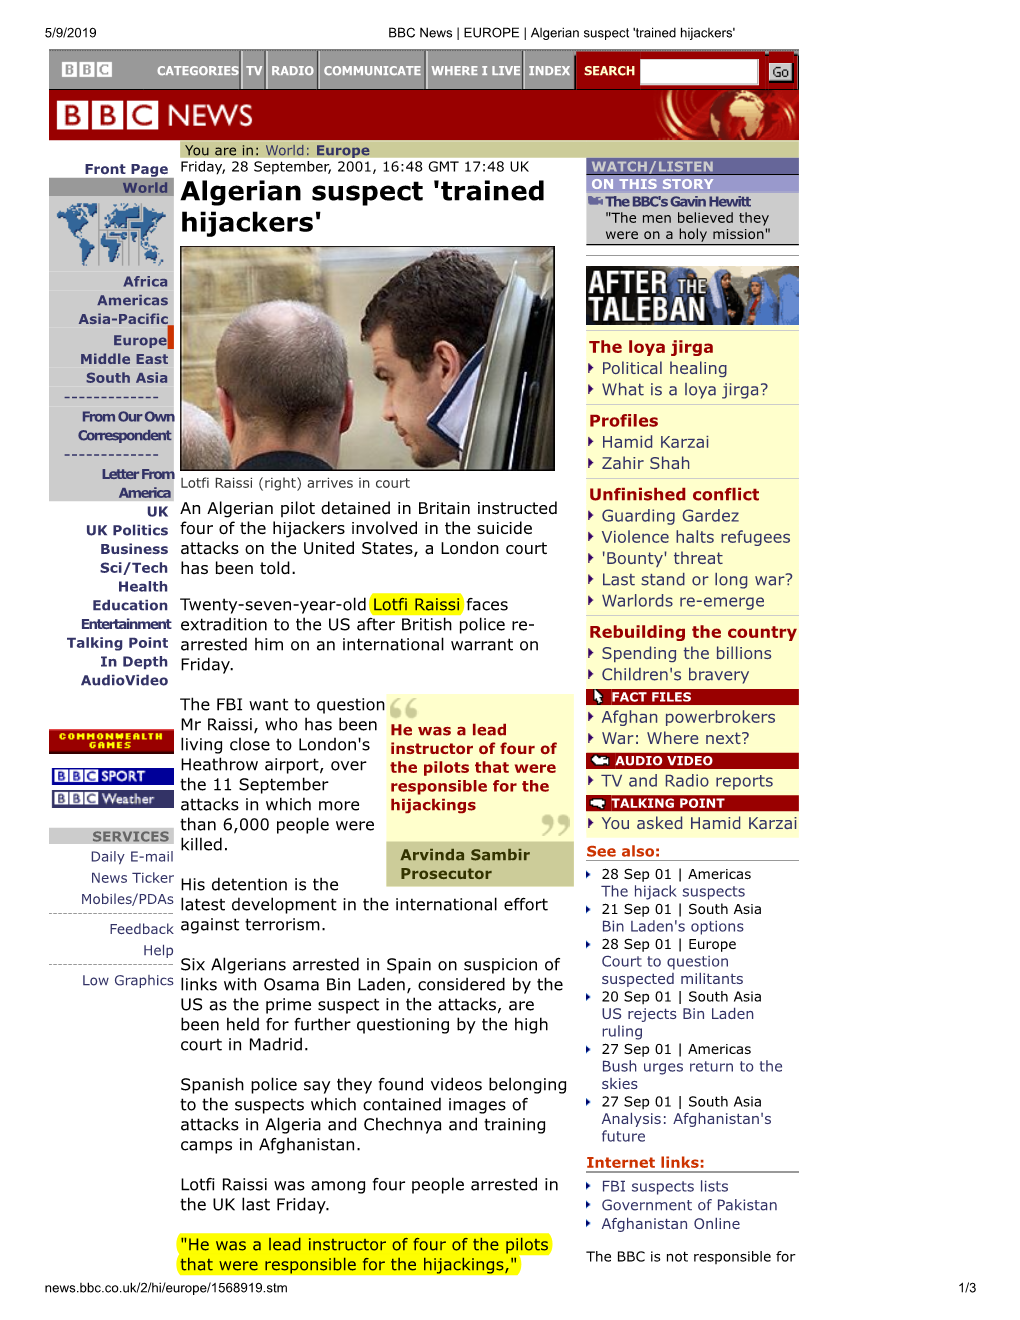 Algerian Suspect Trained Hijackers. BBC News